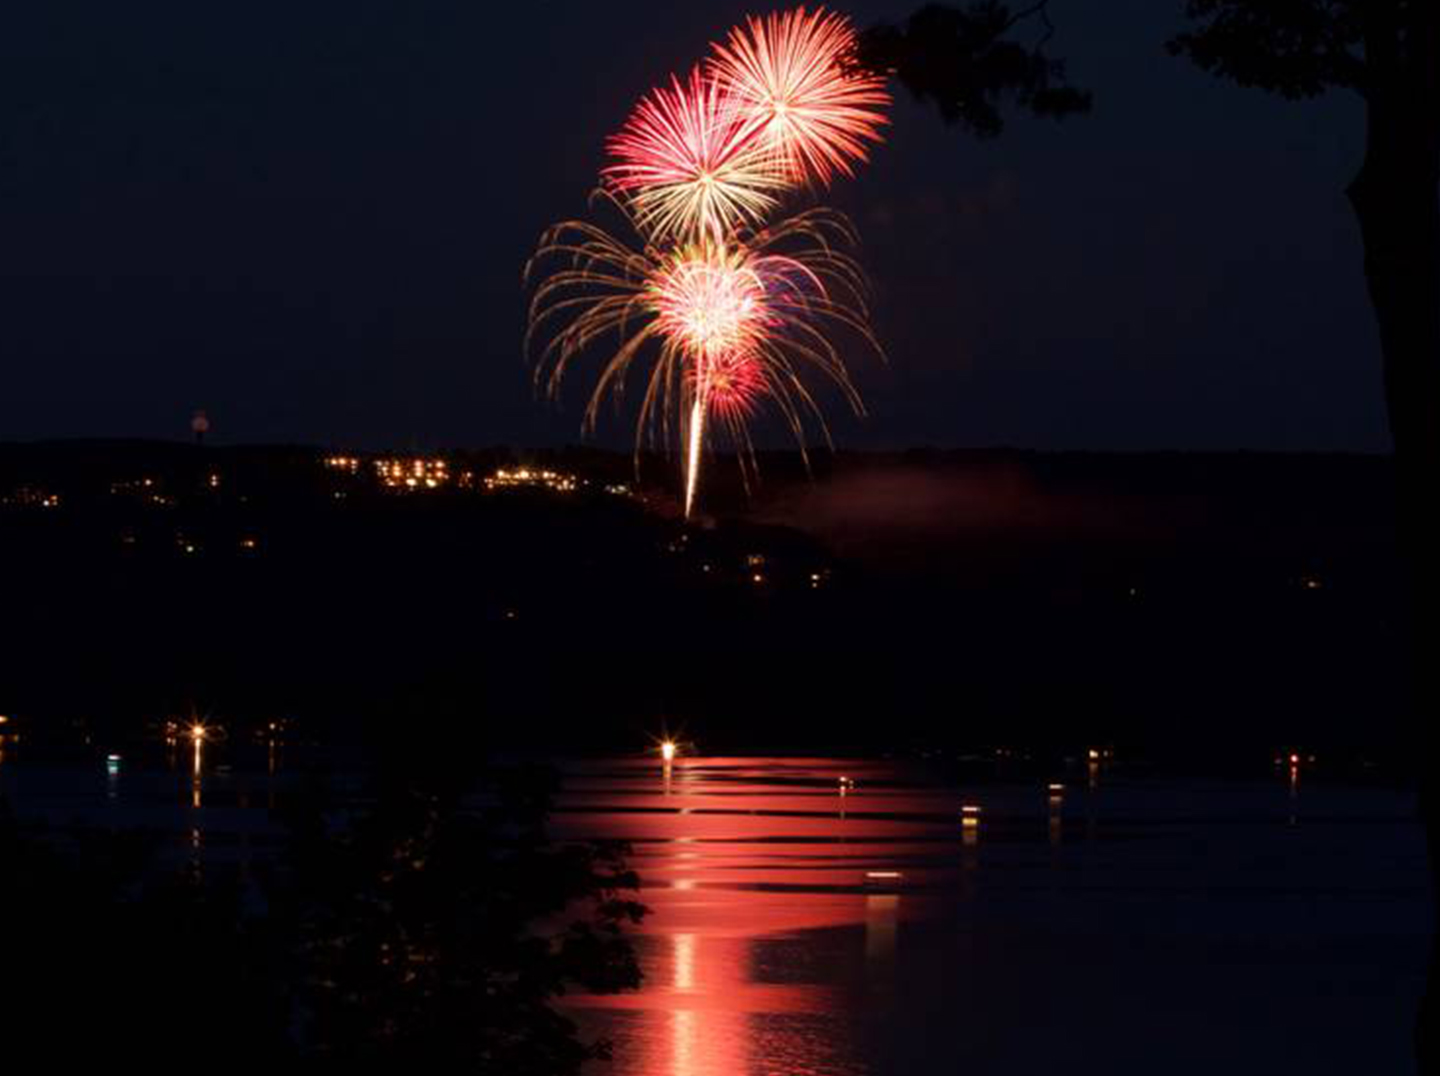 Fireworks over Summit Village during Shanty Creek's Fireworks Festival